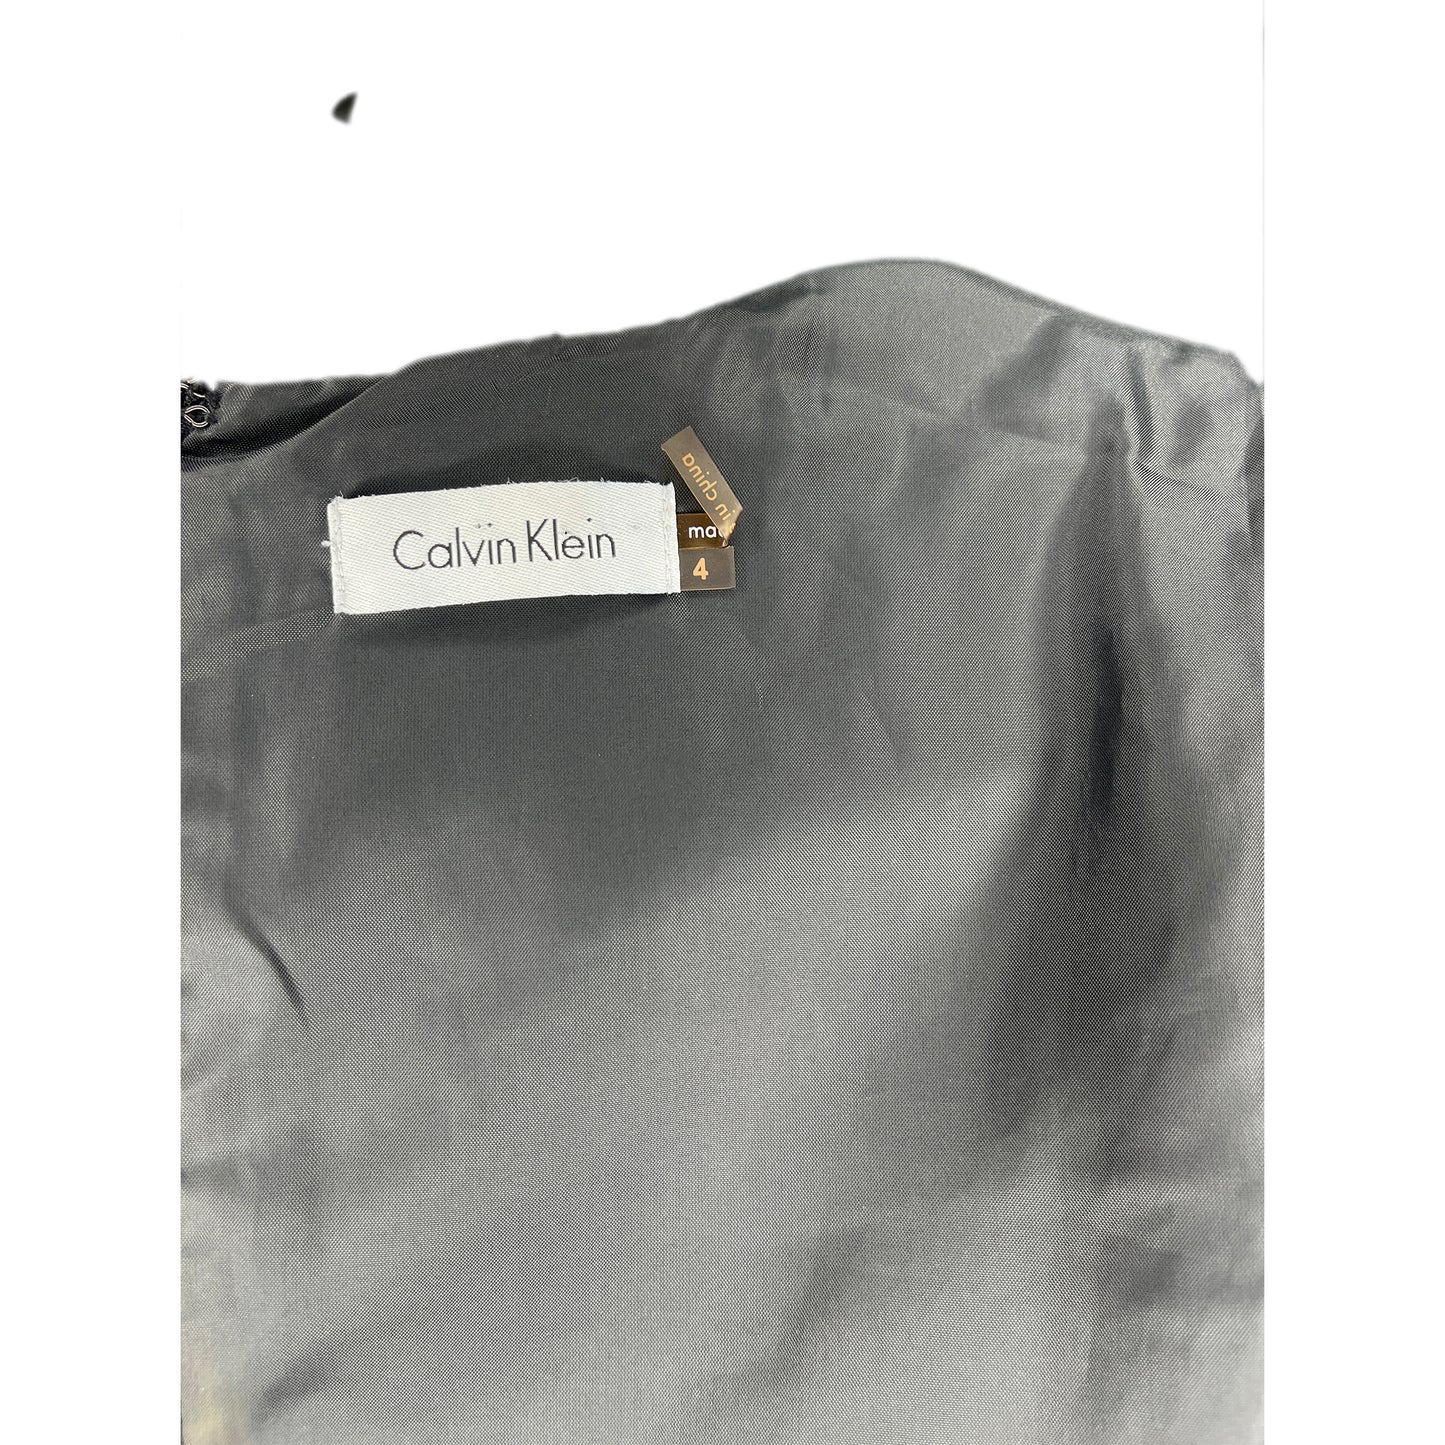 Calvin Klein Dress Sleeveless Above-Knee Black Size 4 SKU 000079-5